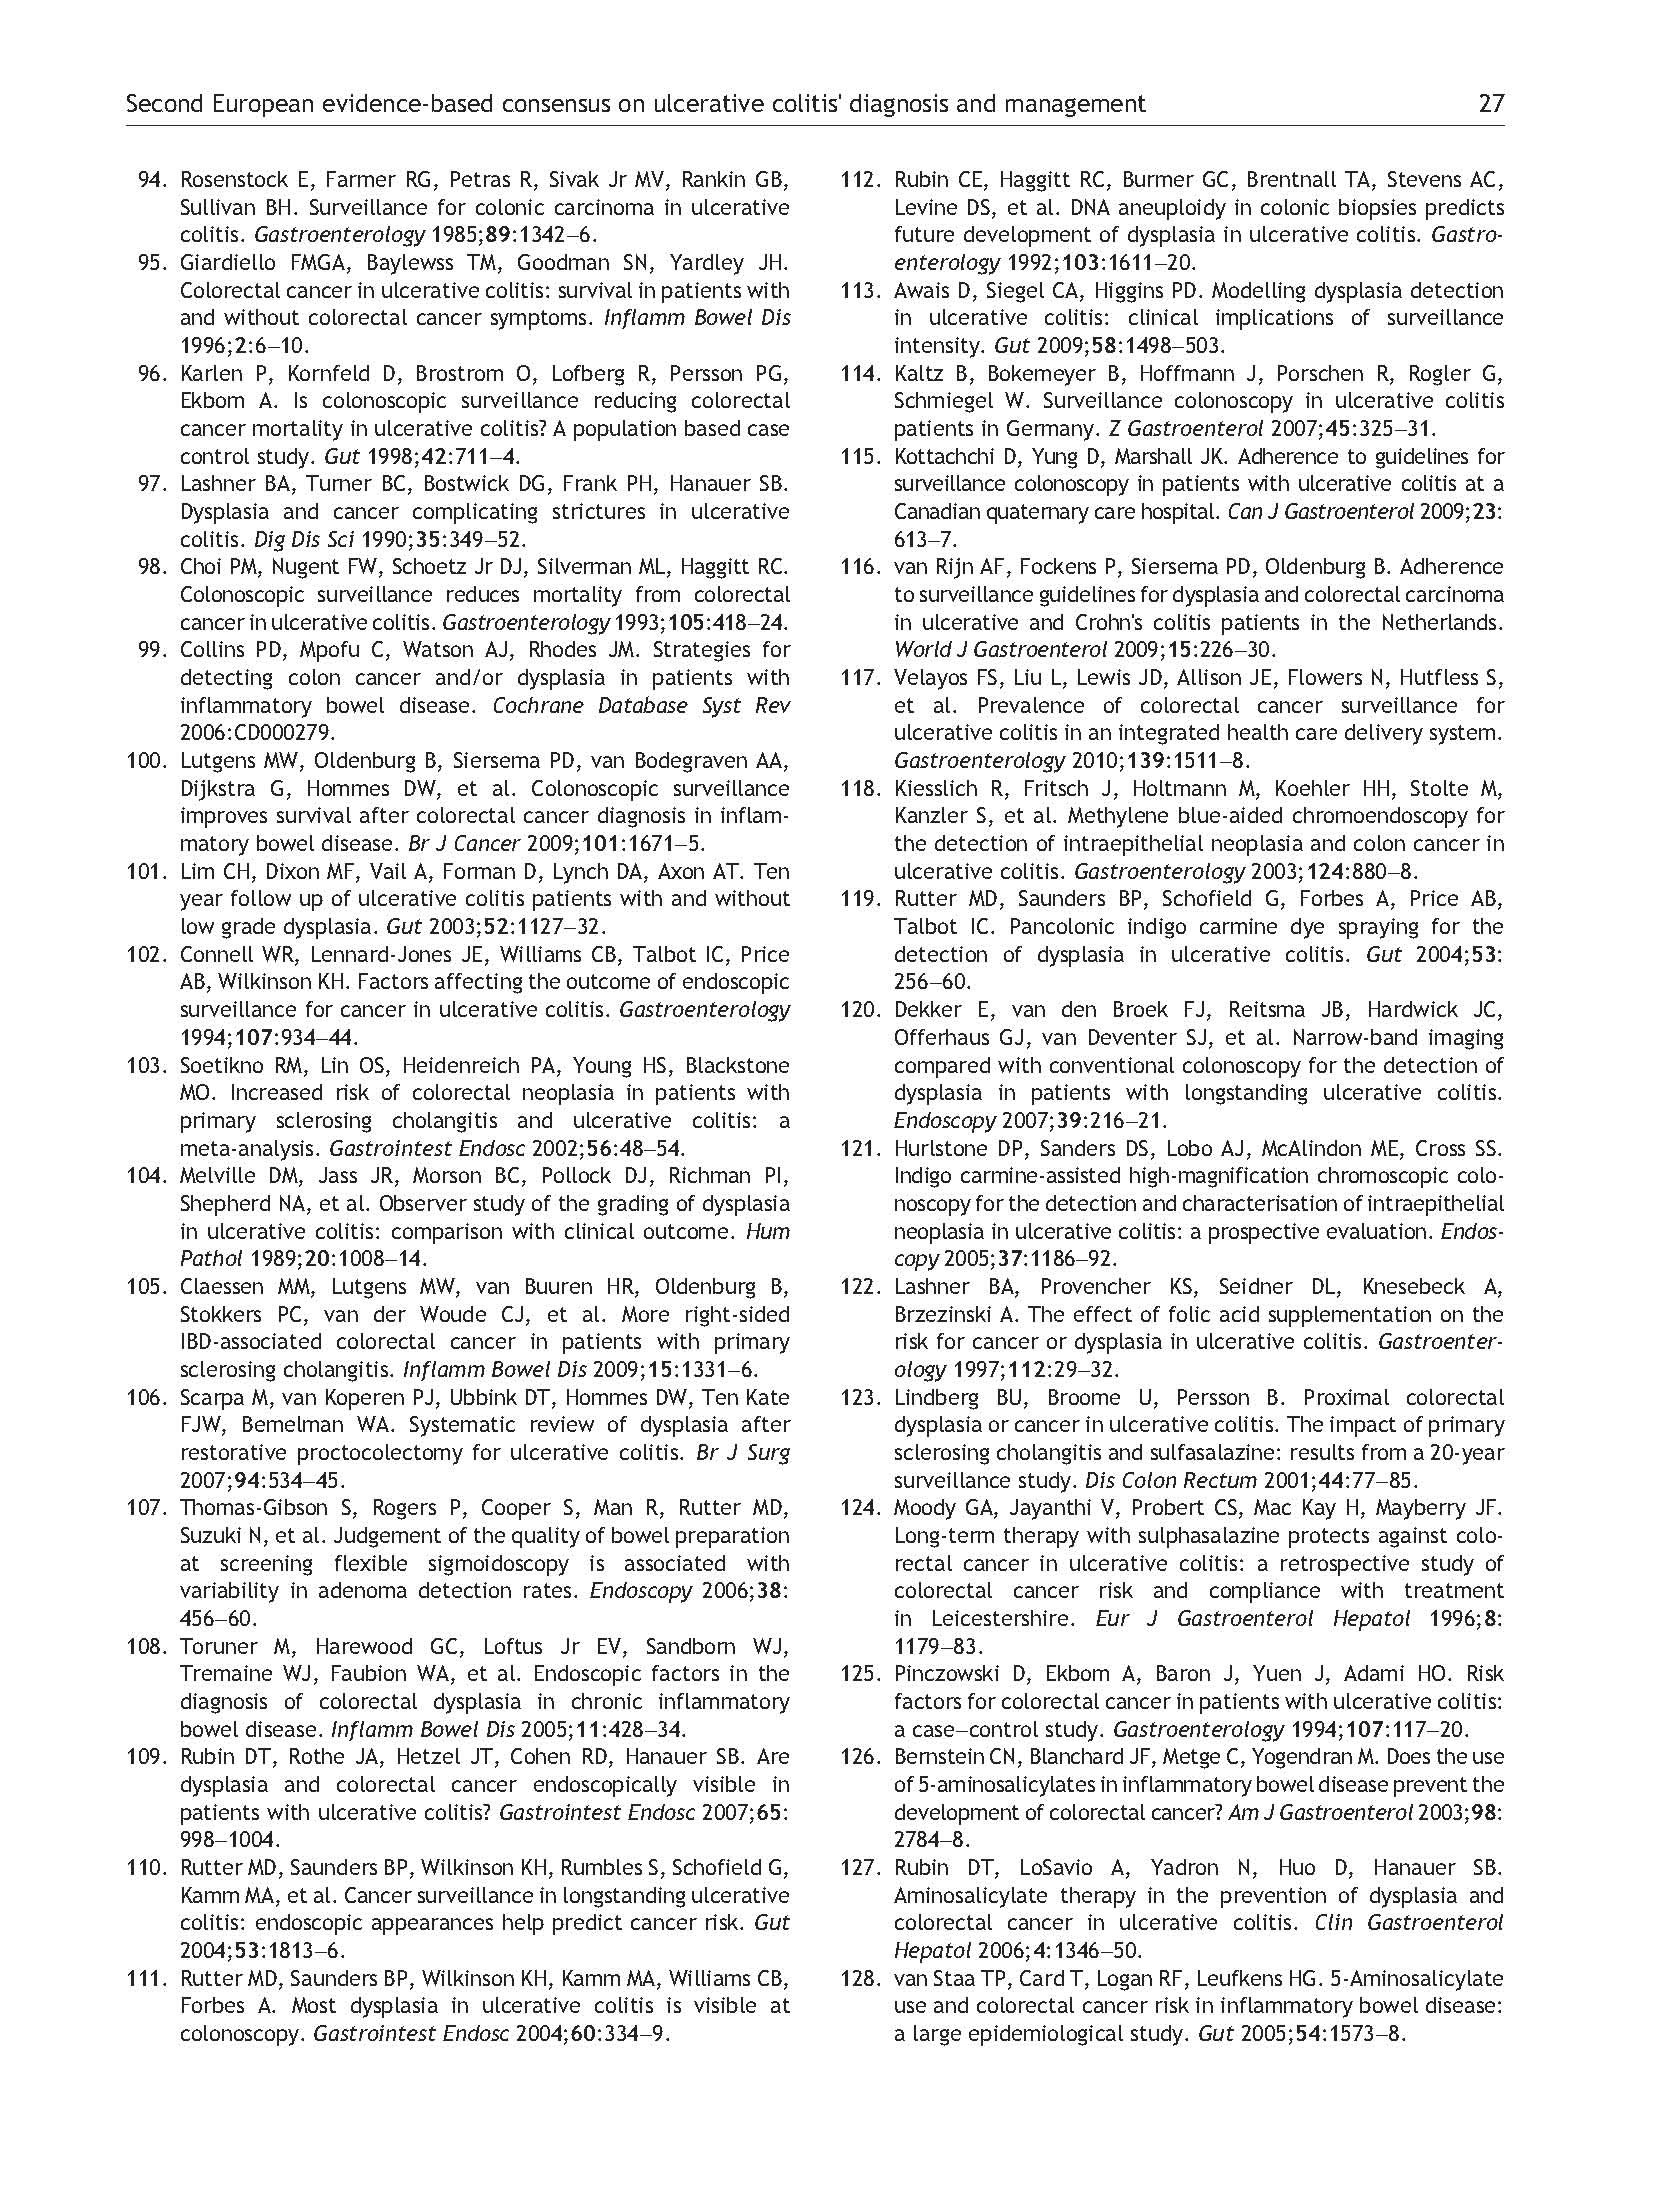 2012-ECCO第二版-欧洲询证共识：溃疡性结肠炎的诊断和处理—特殊情况_页面_27.jpg